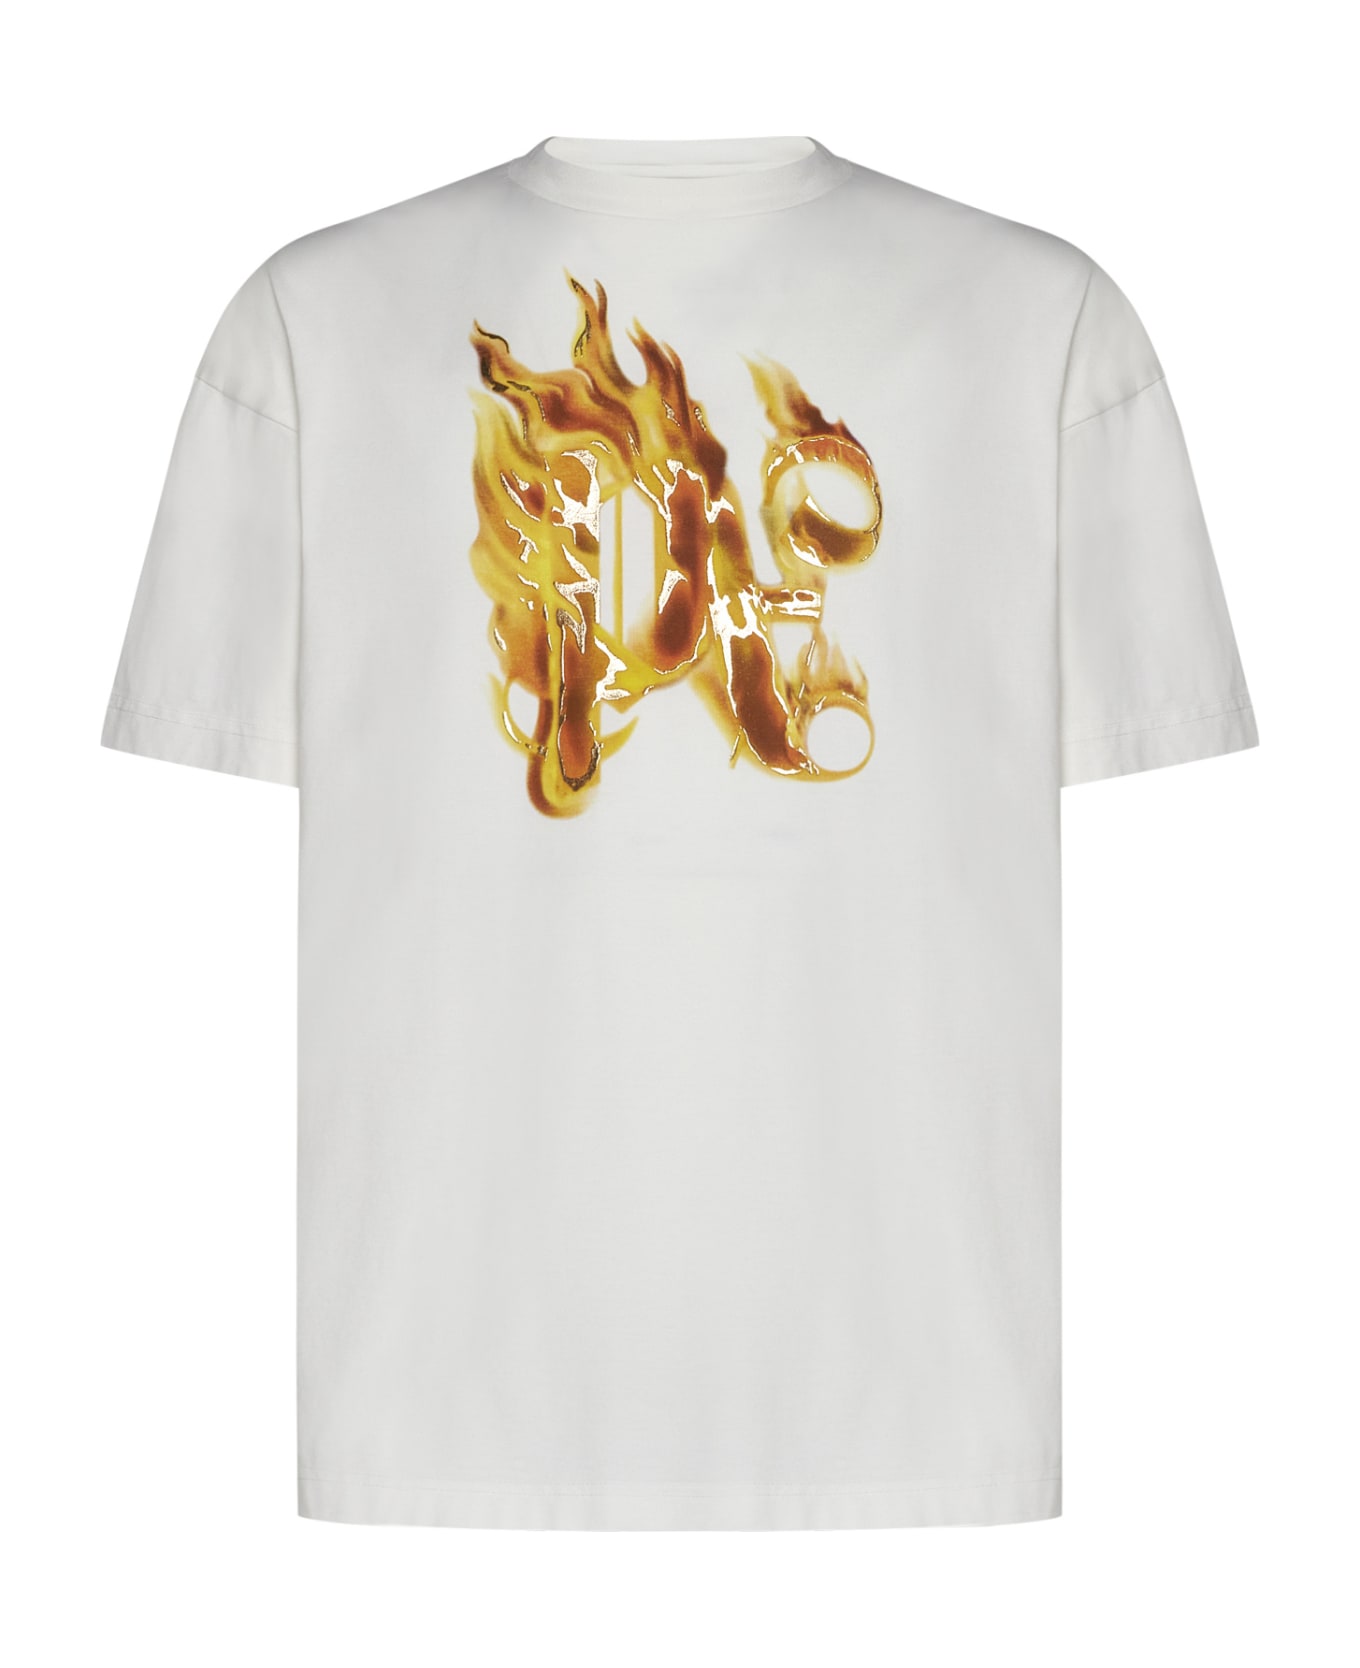 Palm Angels Burning Monogram T-shirt - Off white gold